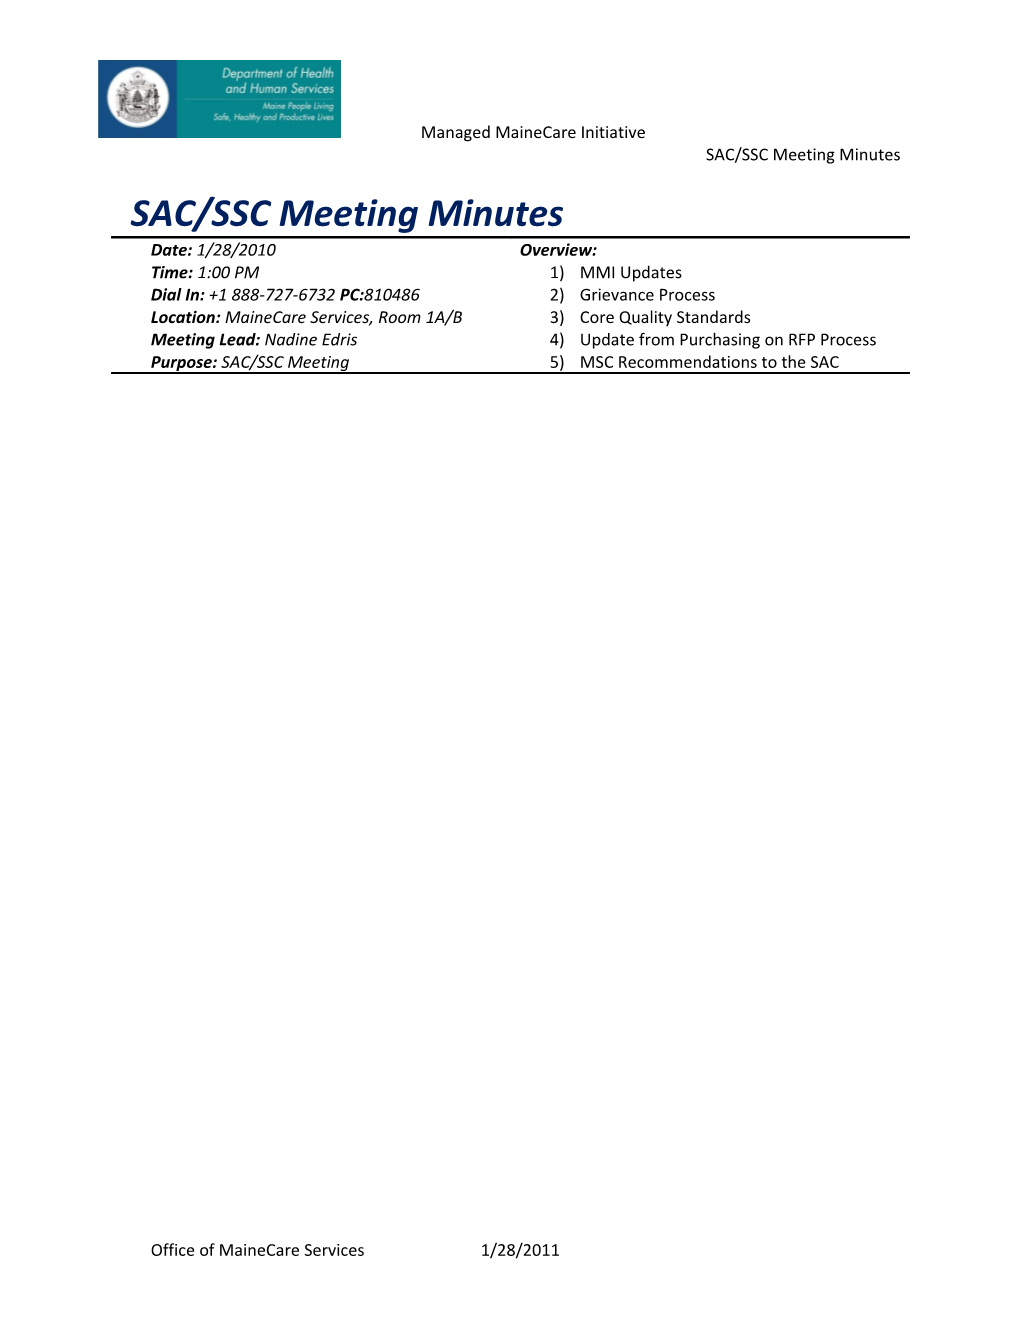 SAC/SSC Meeting Minutes s1